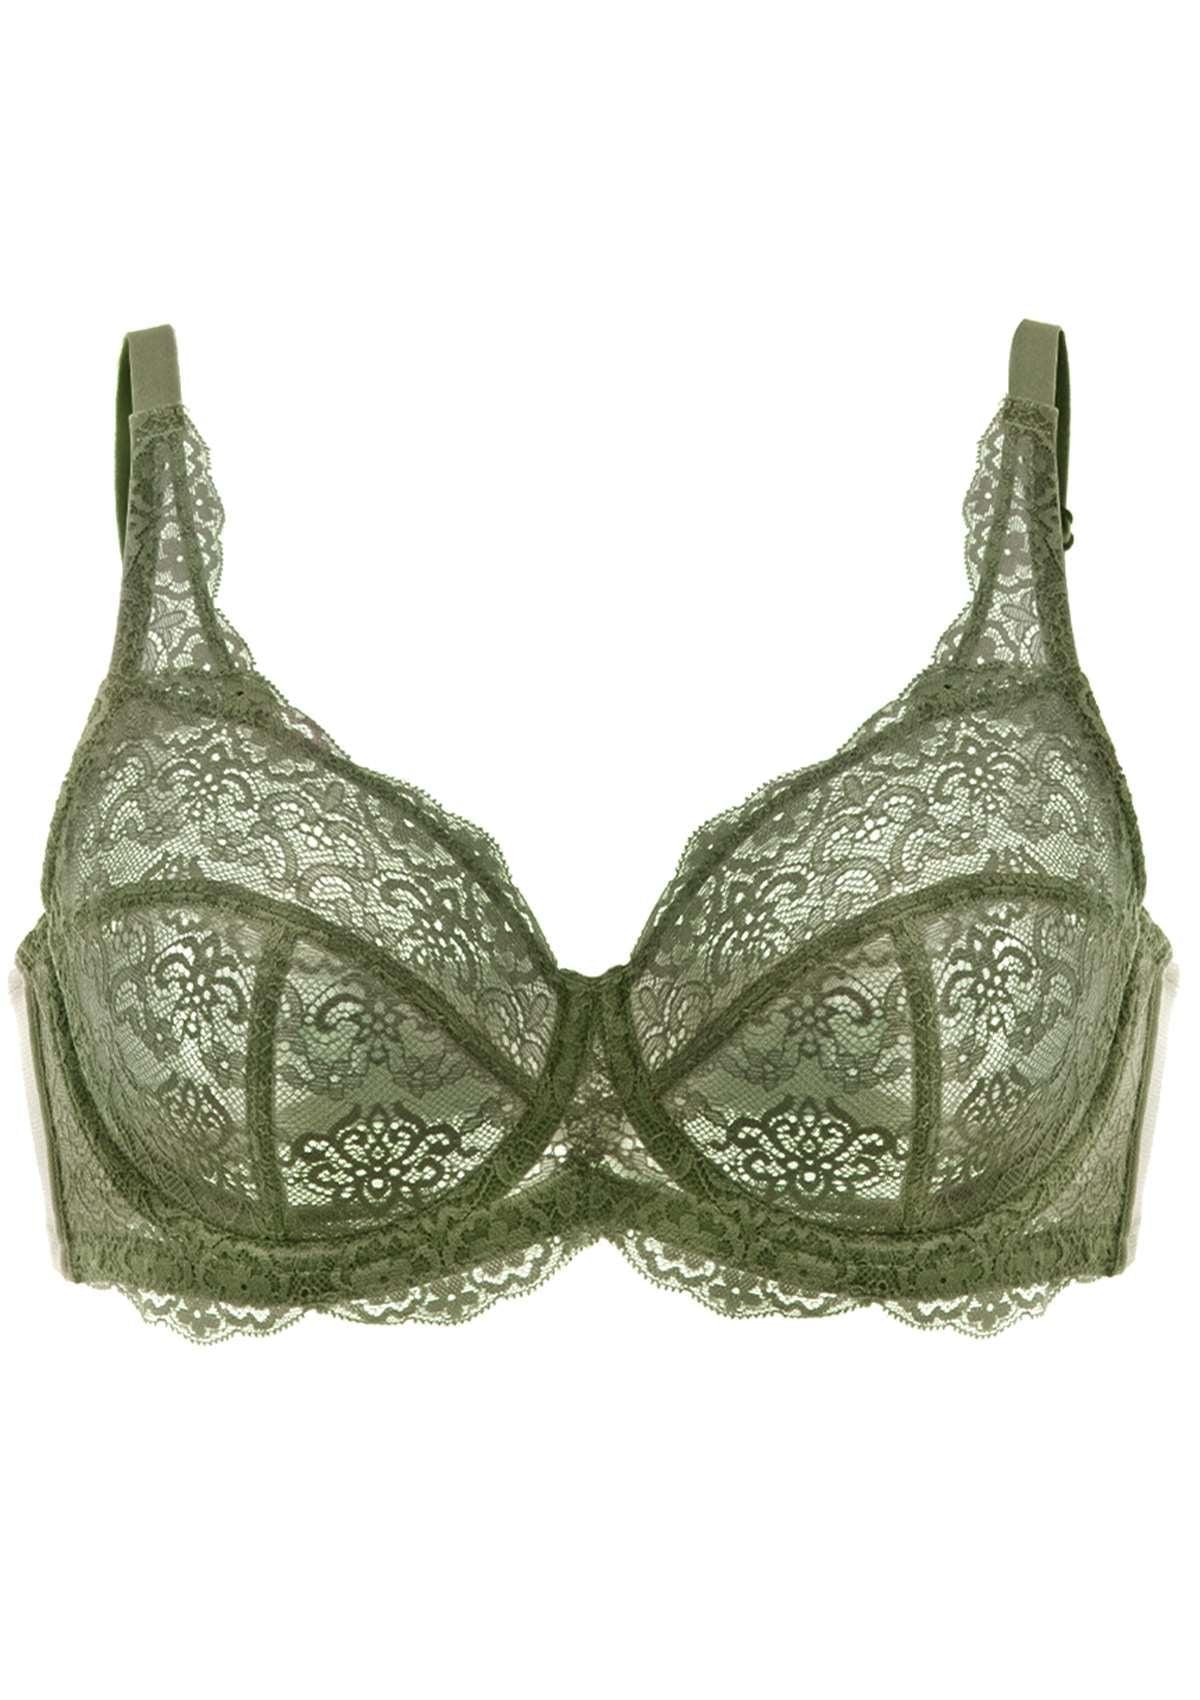 HSIA All-Over Floral Lace Unlined Bra: Minimizer Bra For Heavy Breasts - Dark Green / 44 / DD/E